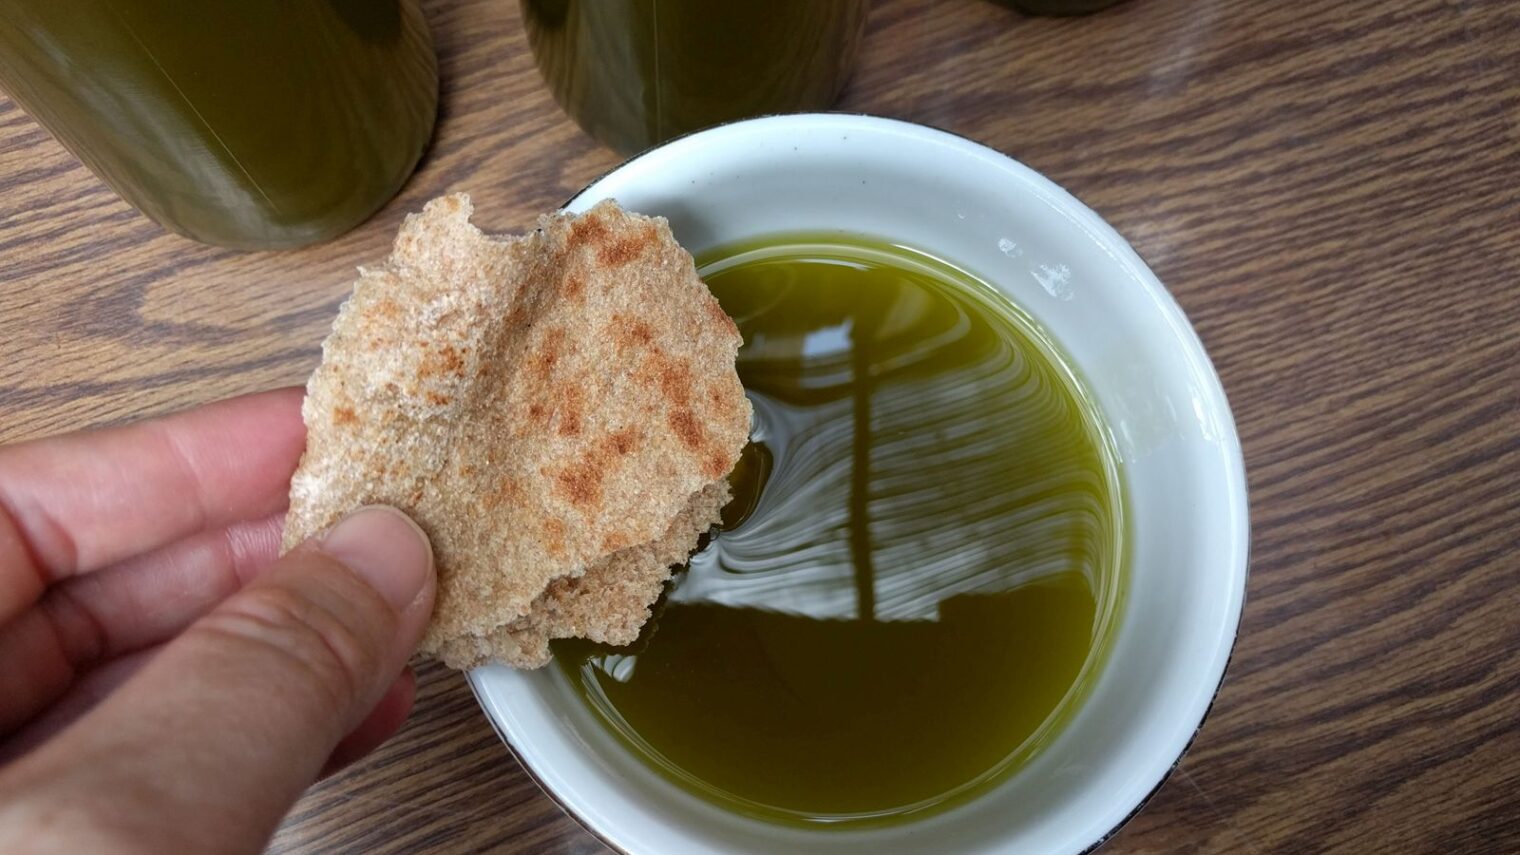 Olive-oil tasting at Deir Hanna. Photo by Viva Sarah Press